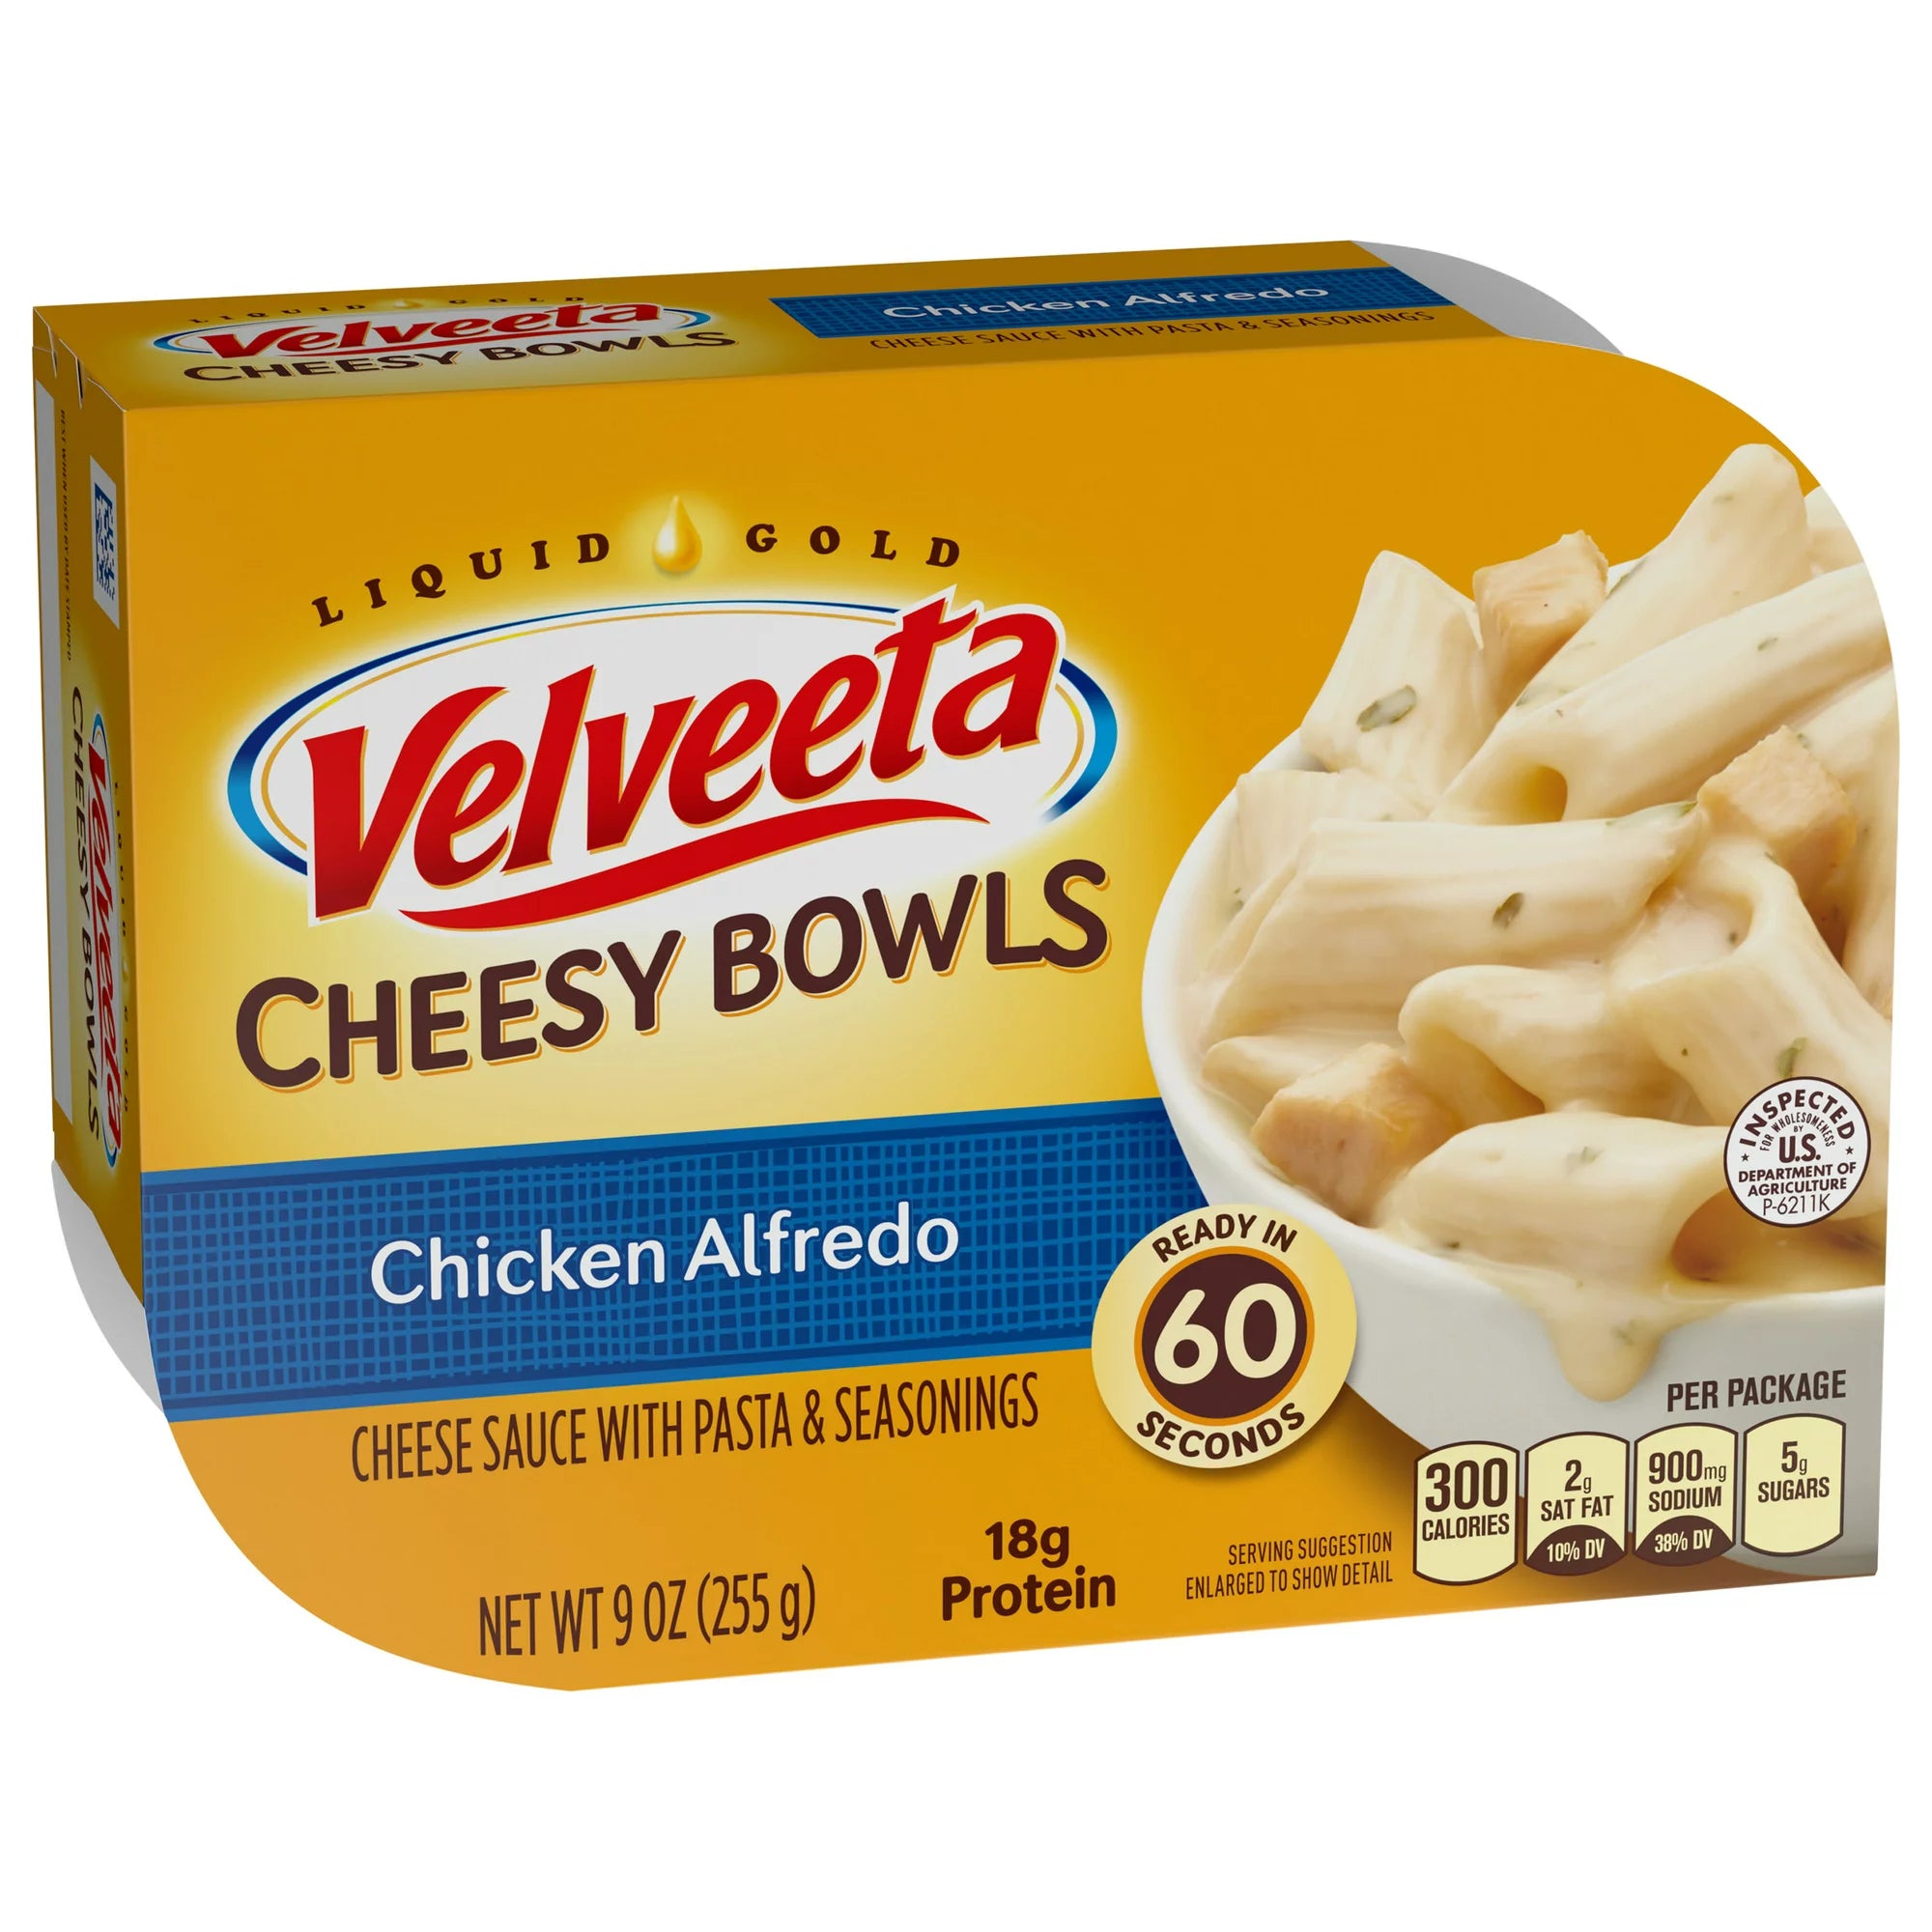 Velveeta Cheesy Bowls Chicken Alfredo Microwave Meal, 9 oz Tray